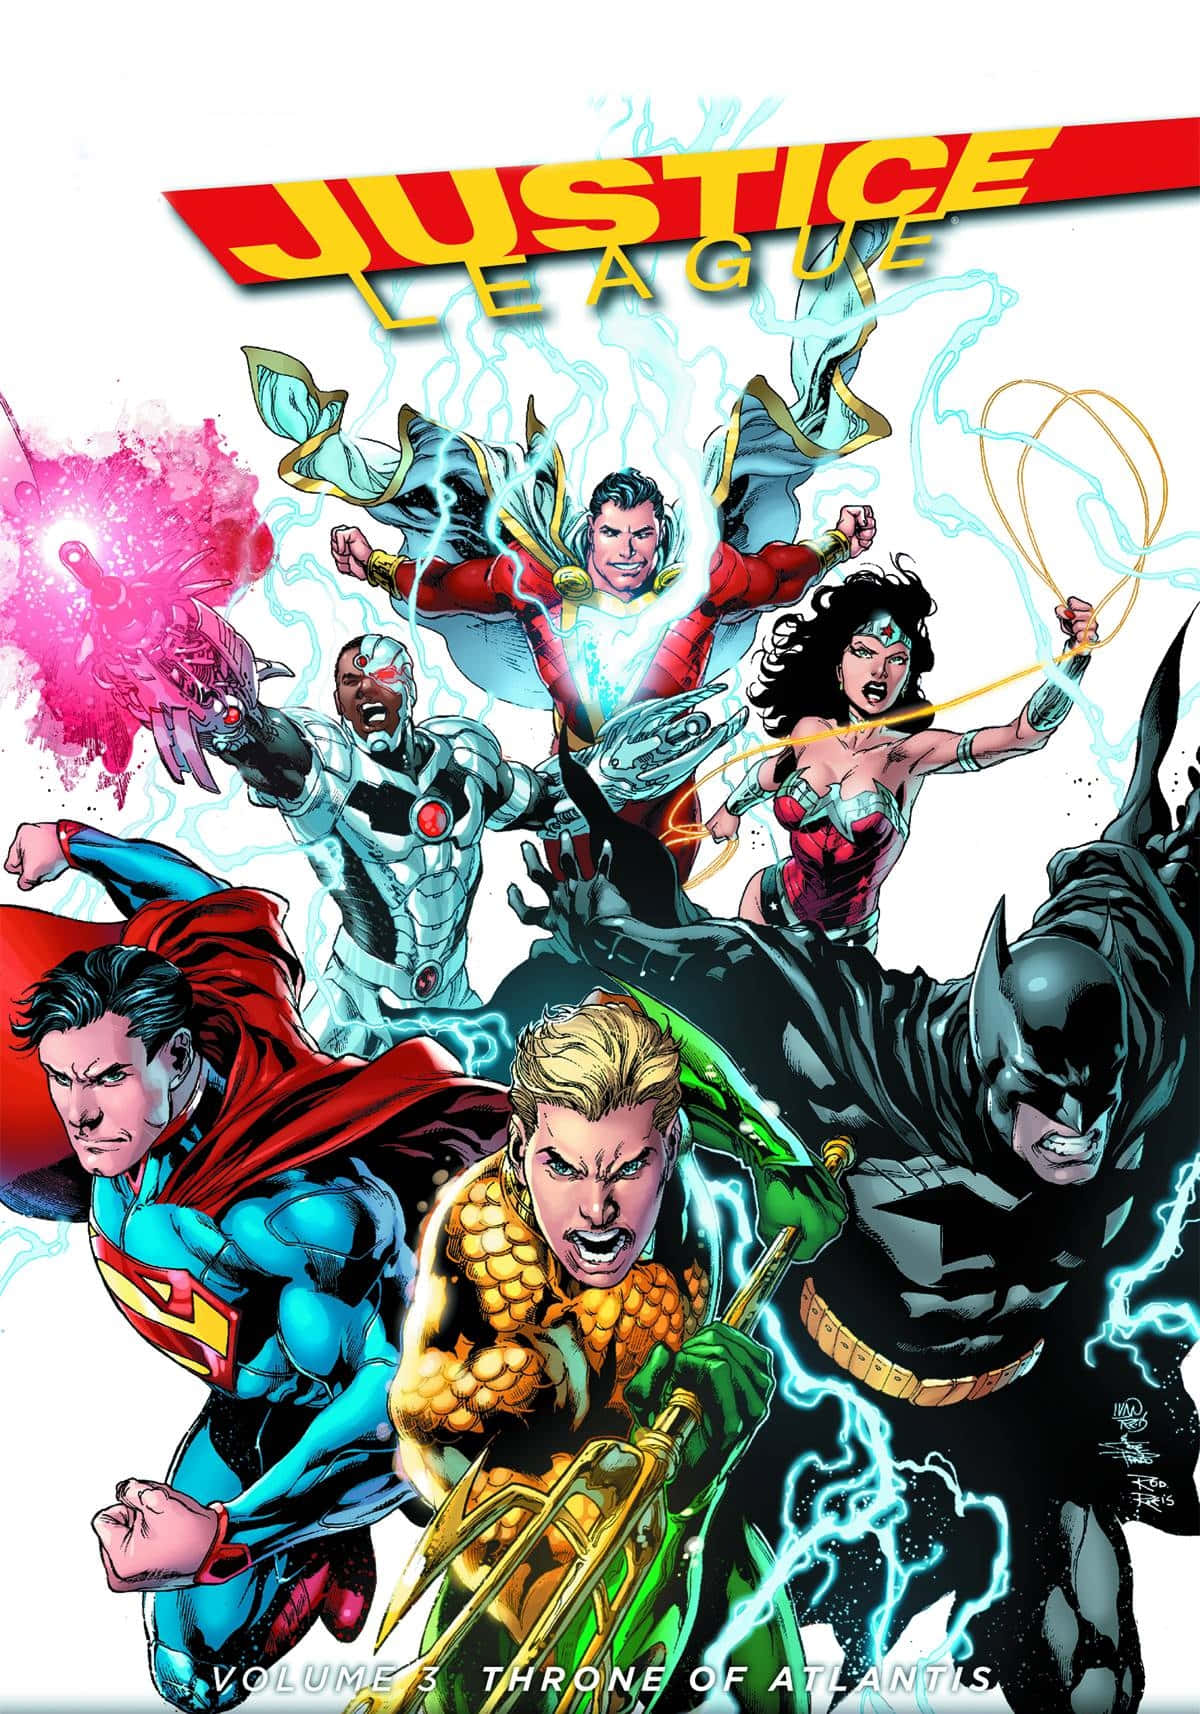 The Justice League unites in Throne of Atlantis Wallpaper